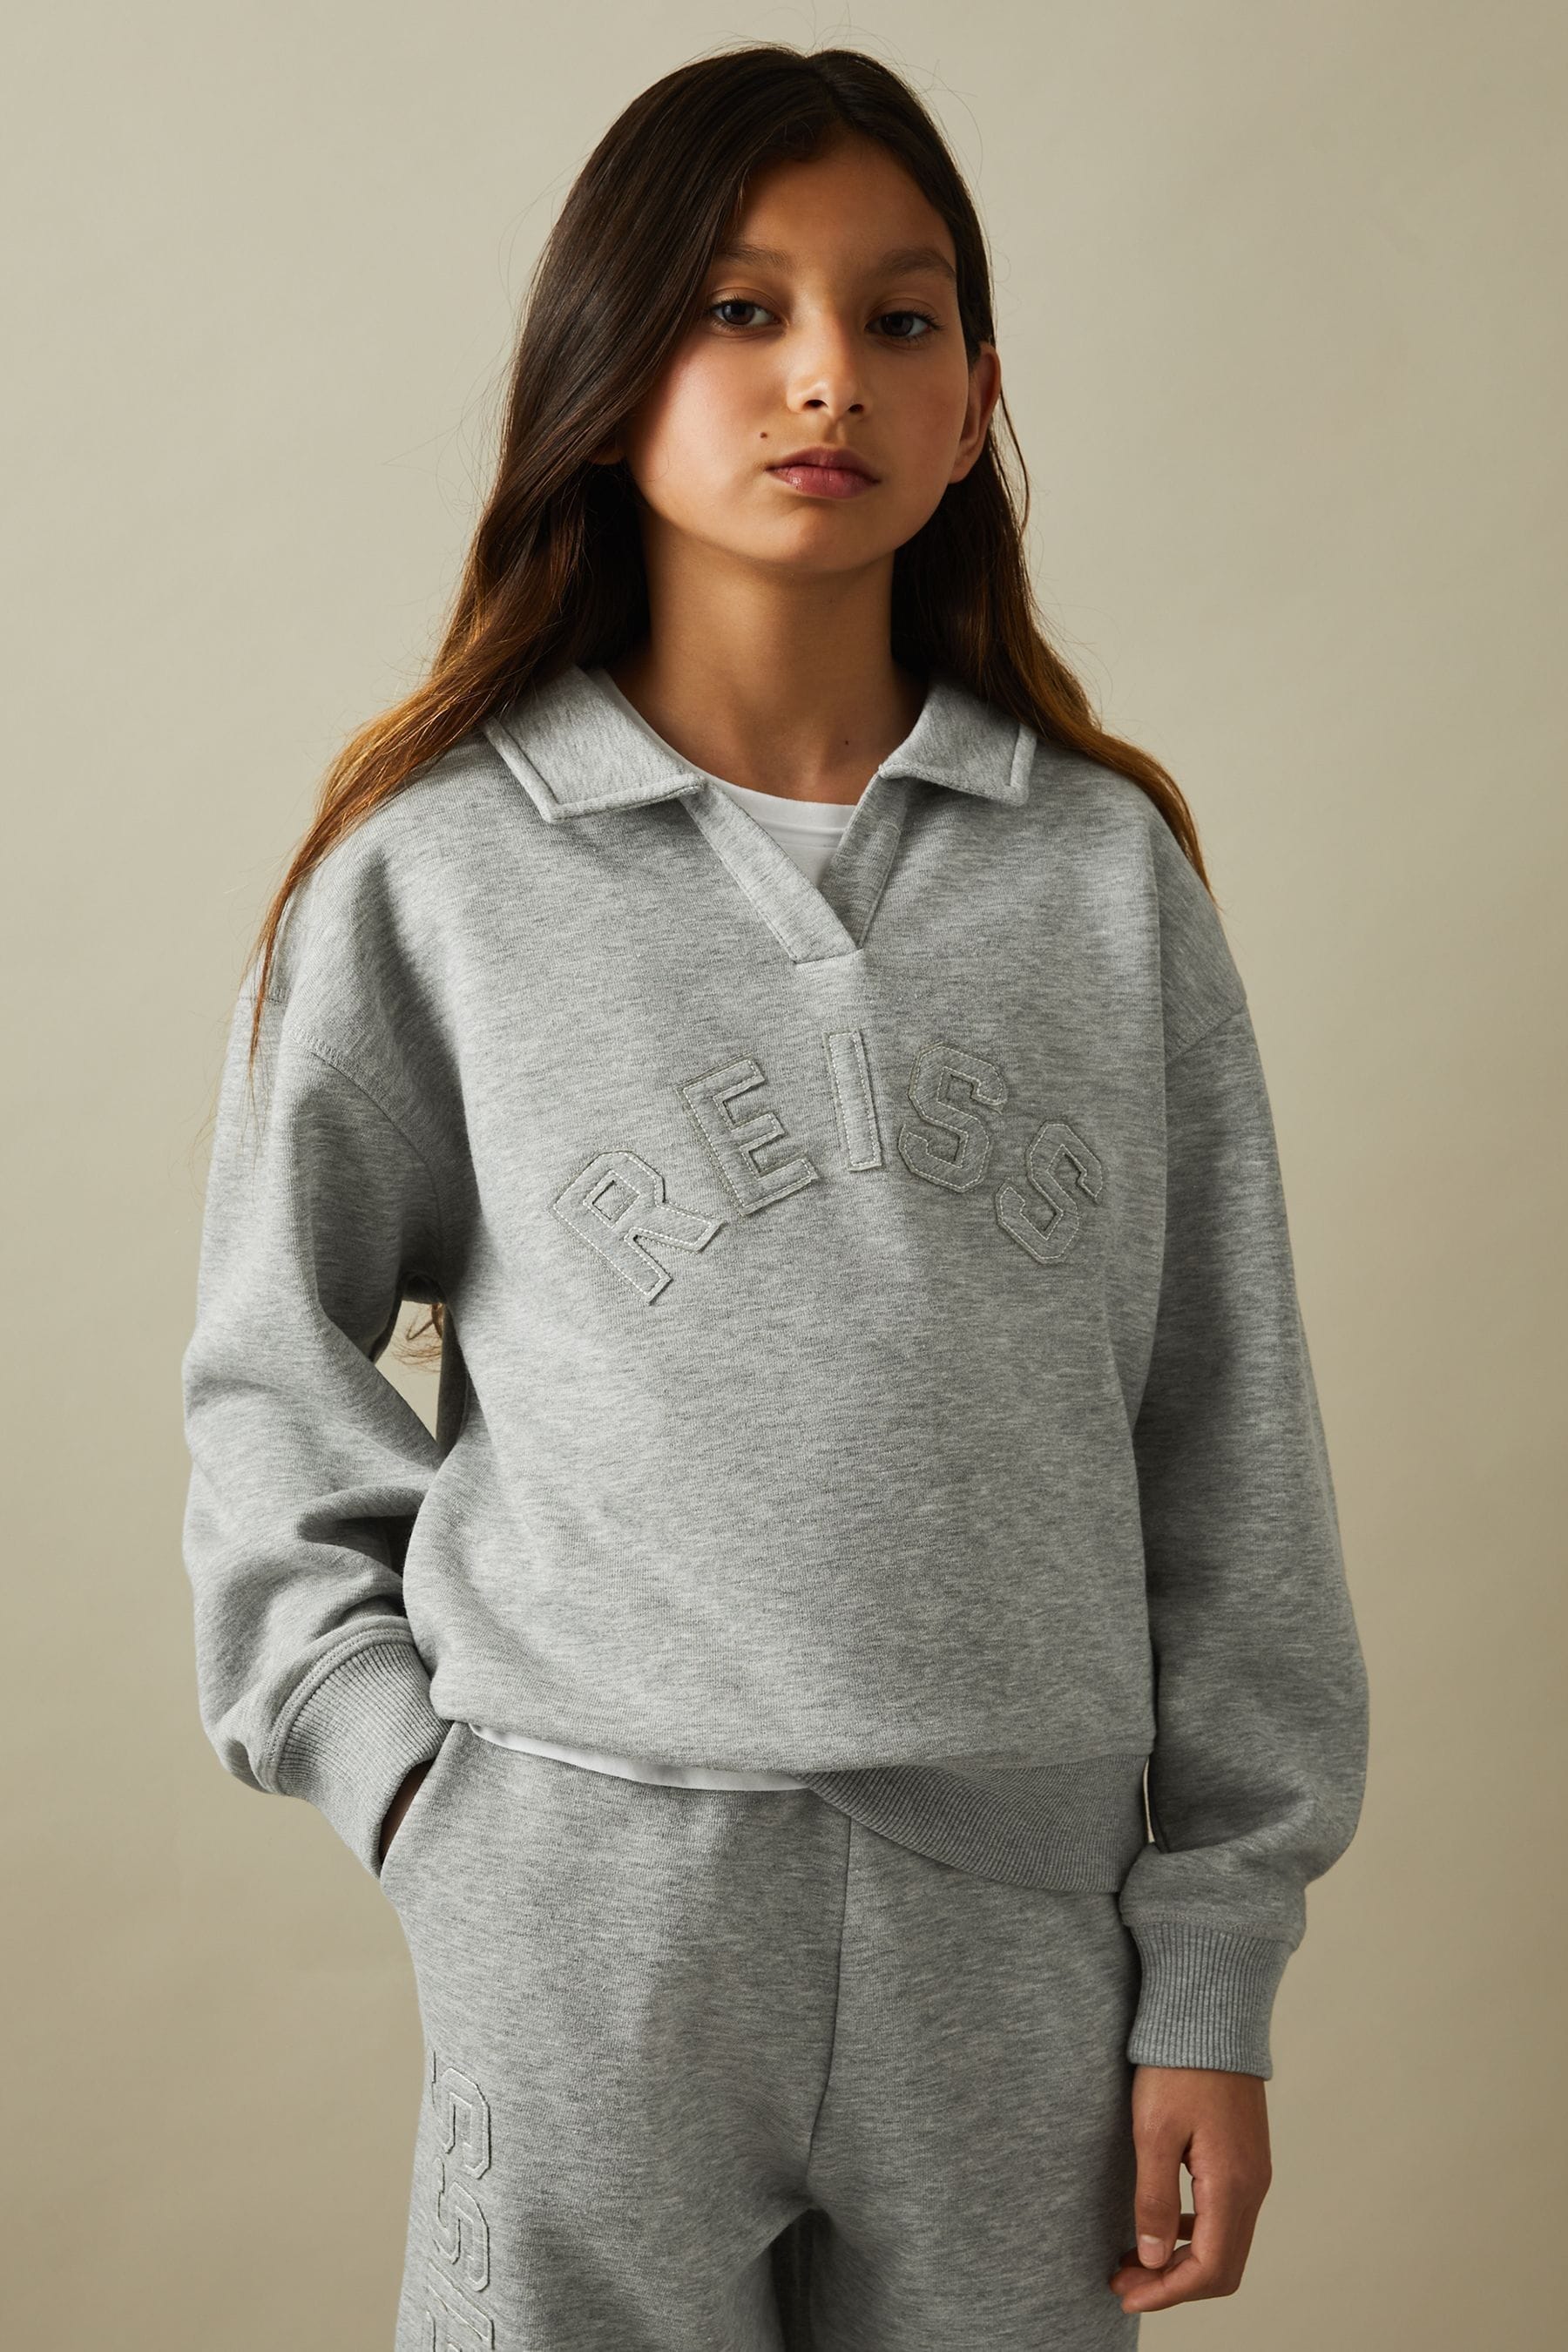 Reiss Paulina - Grey Junior Applique Logo Sweatshirt, Age 4-5 Years